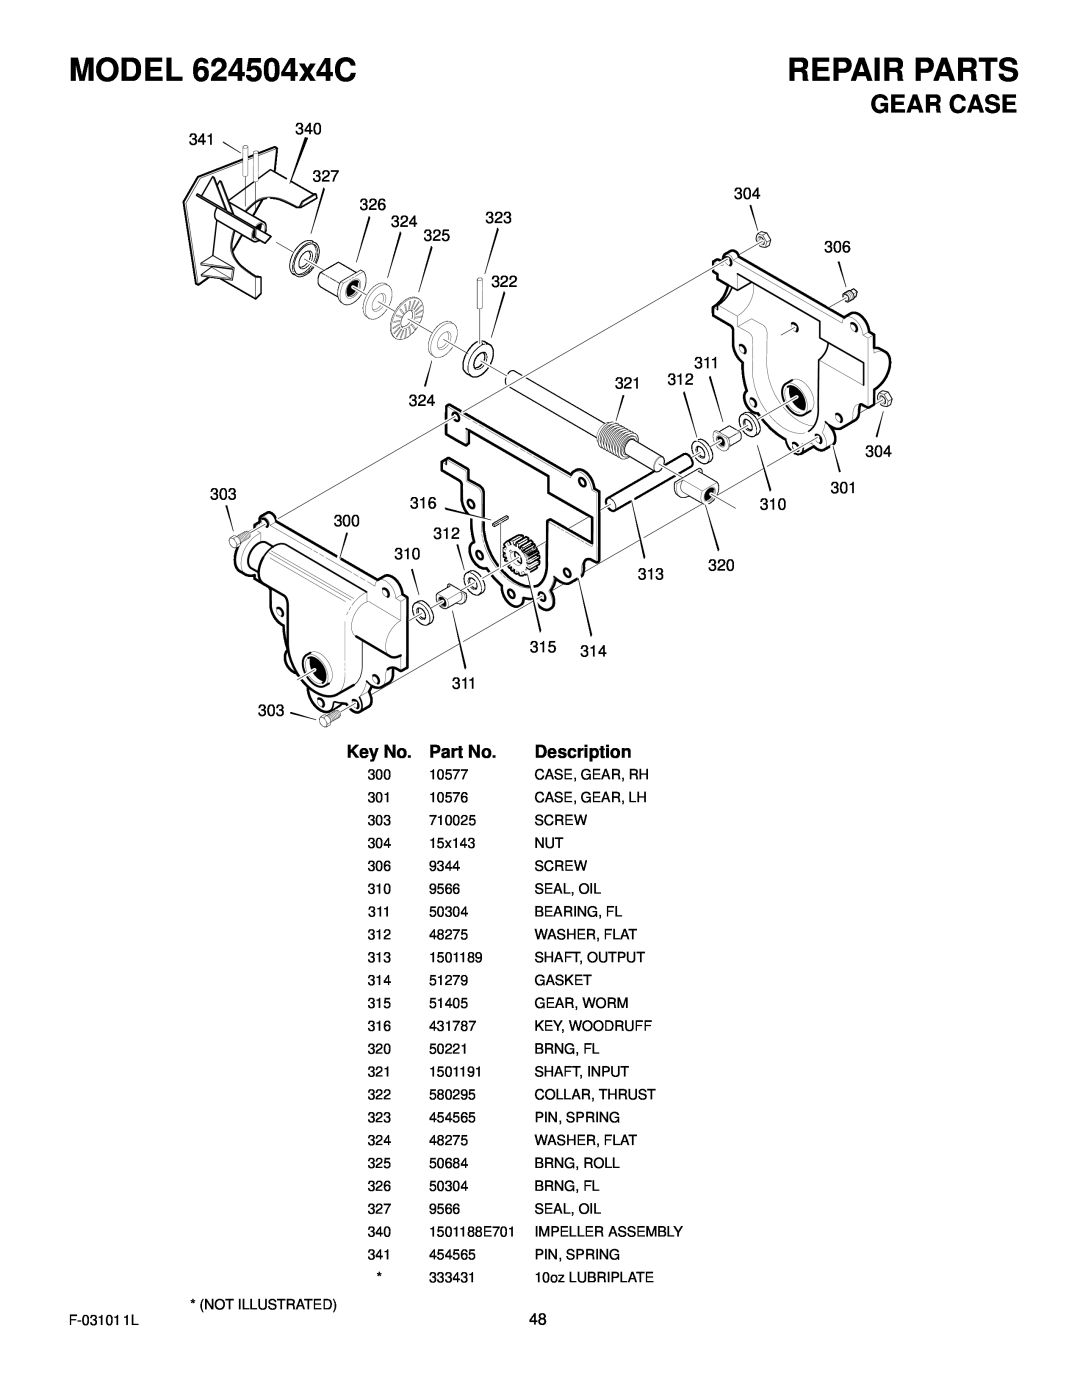 Murray manual Gear Case, MODEL 624504x4C, Repair Parts, Description 